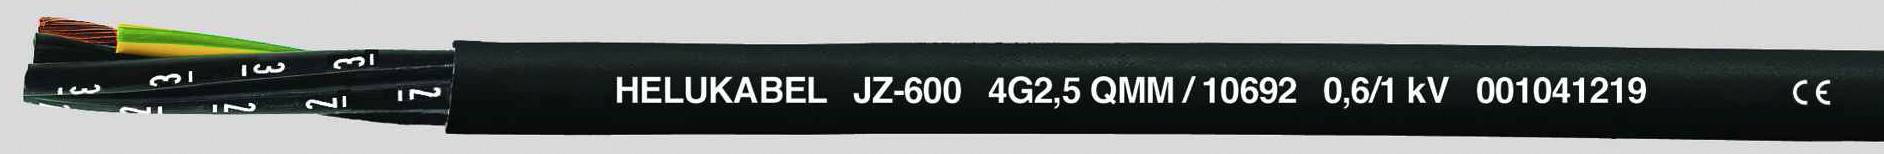 HELUKABEL JZ-600 Steuerleitung 3 G 1 mm² Schwarz 10617-1000 1000 m